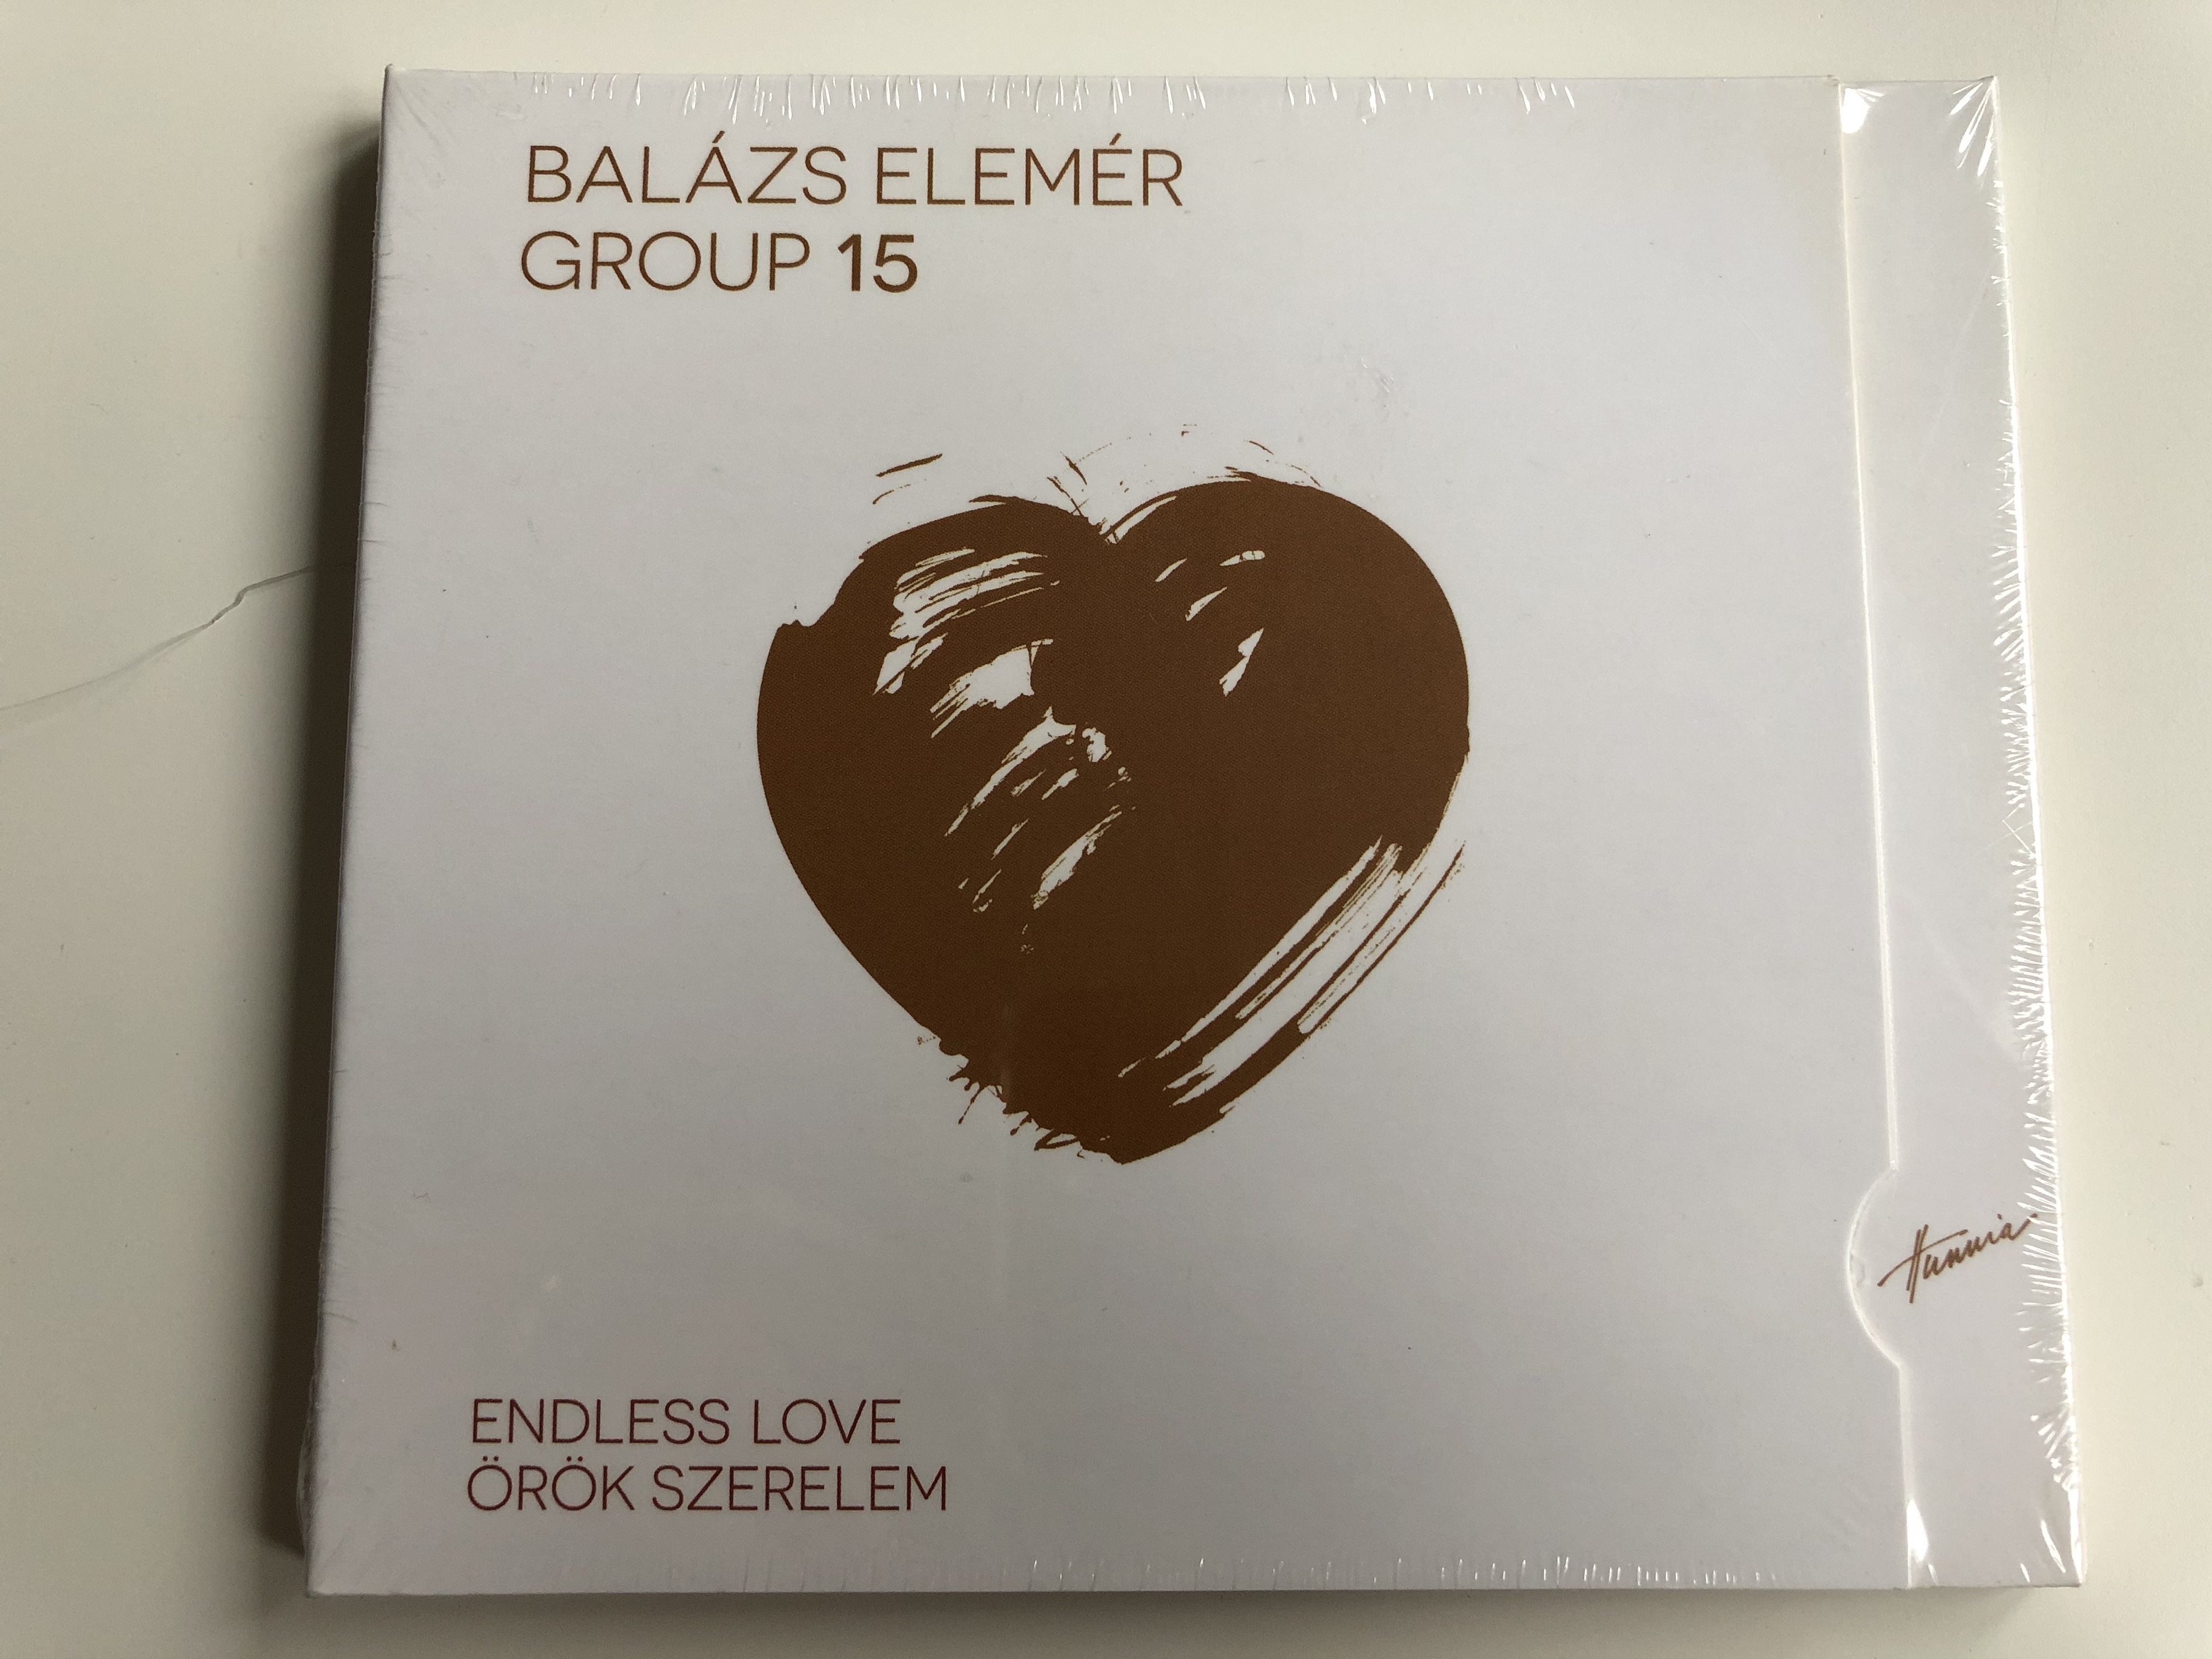 bal-zs-elem-r-group-15-endless-love-orok-szerelem-hunnia-records-film-production-audio-cd-2015-hrcd-1523-1-.jpg